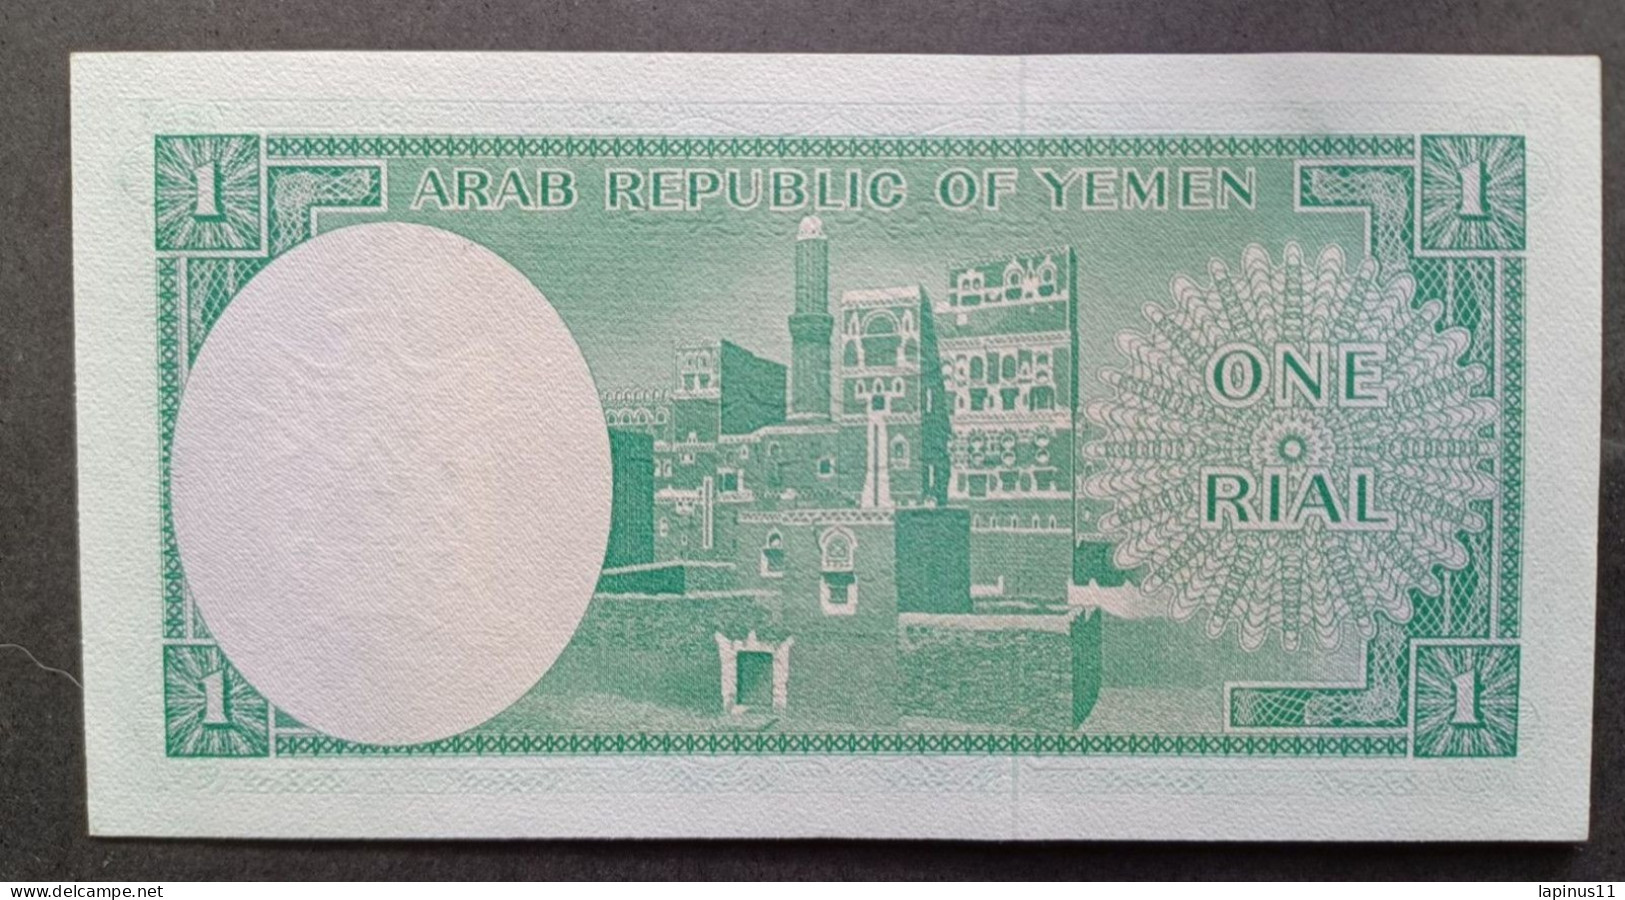 BANKNOTE اليمن YEMEN ARAB REPUBLIC 1 RIAL 1969 UNCIRCULATED SUPERB - Yémen